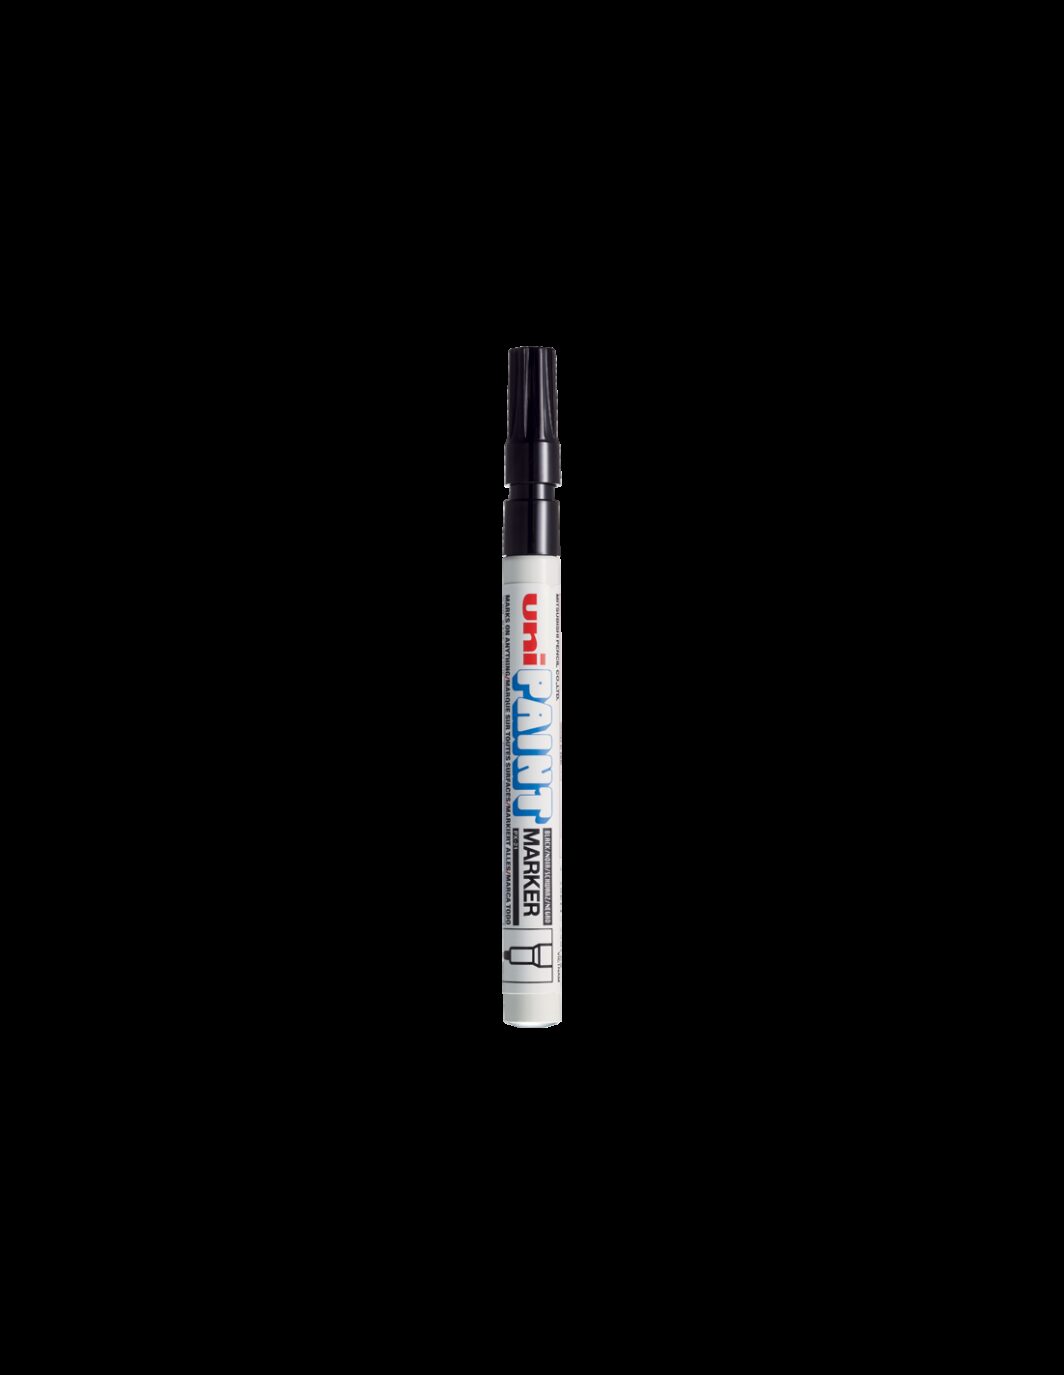 Uniball PX-21 Paint Marker (Black)-0